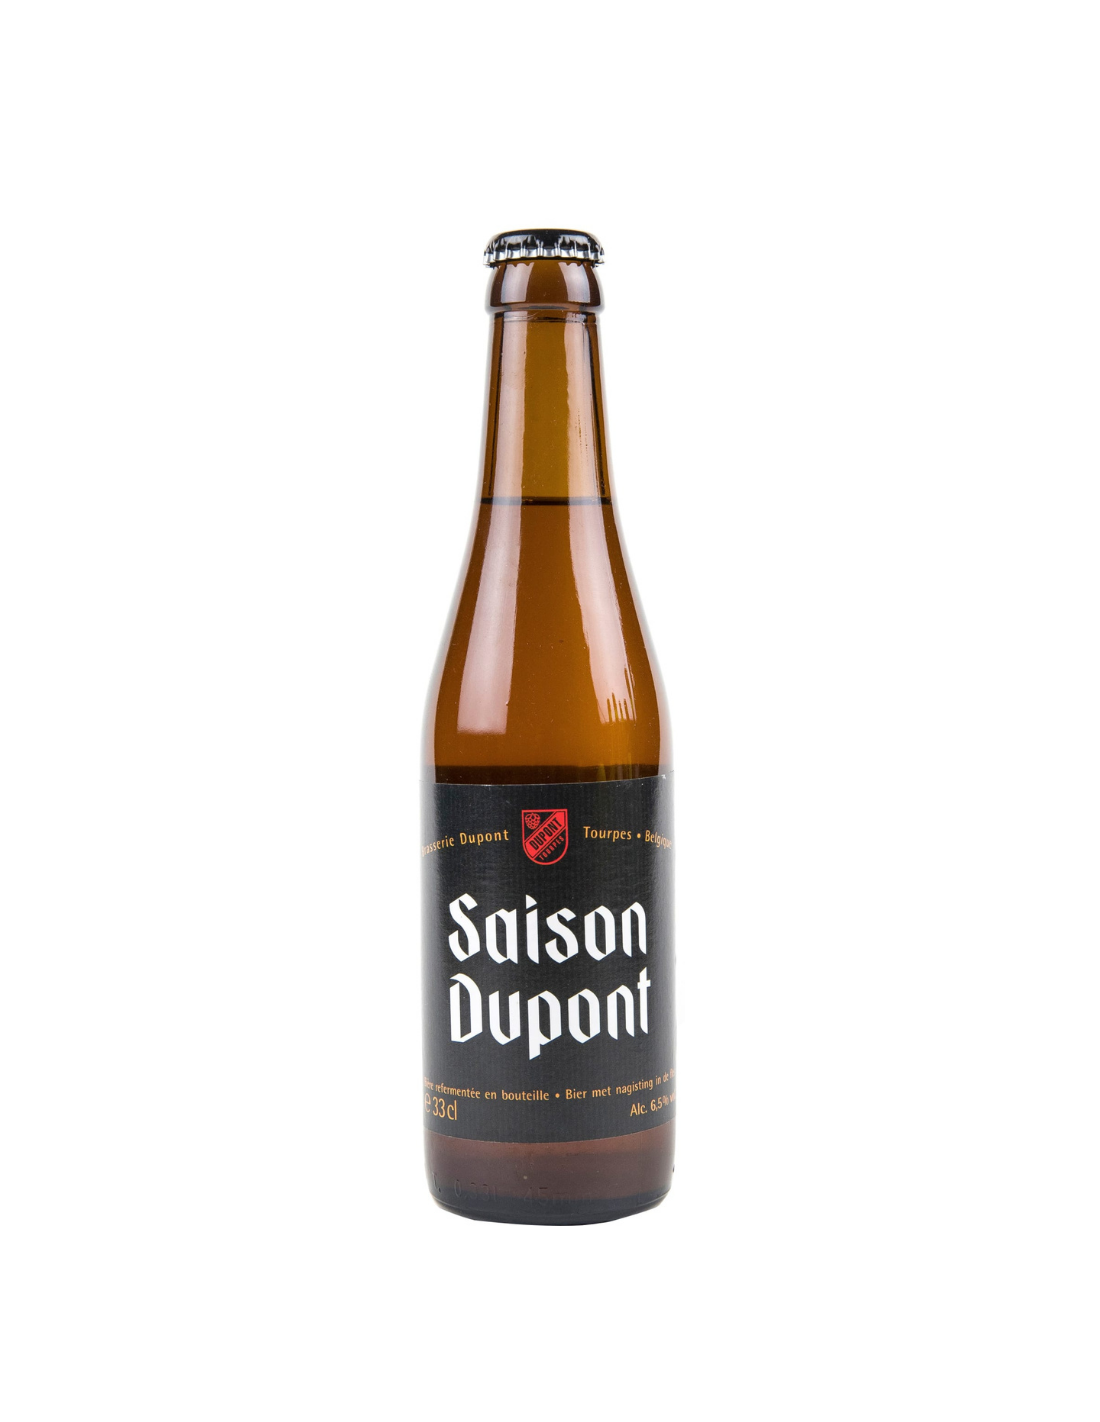 Bere blonda Saison Dupont, 6.5% alc., 0.33L, Belgia